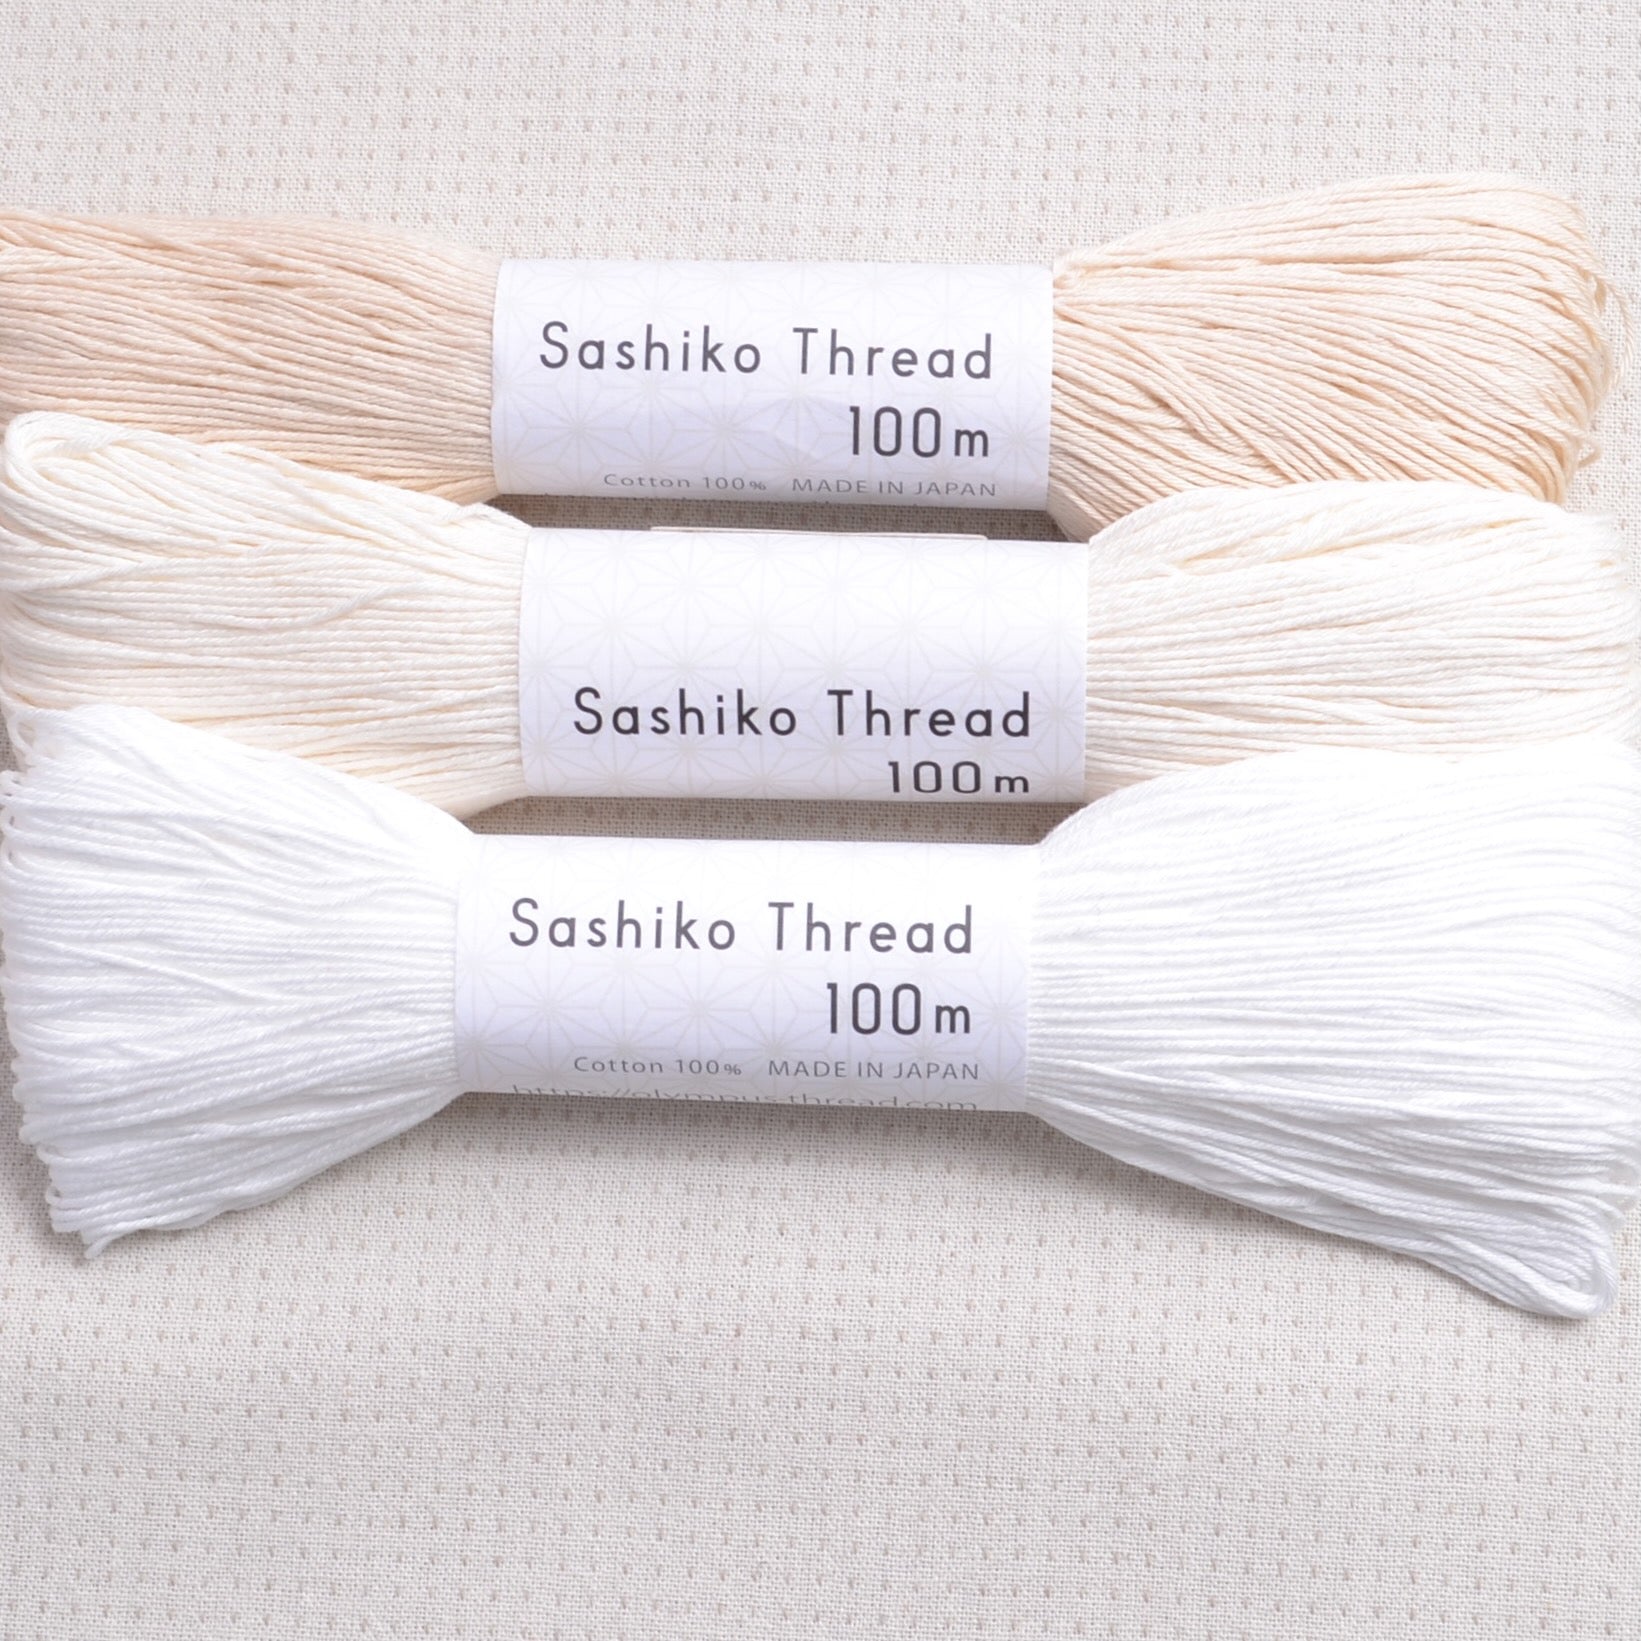 white and off-white sashiko threads